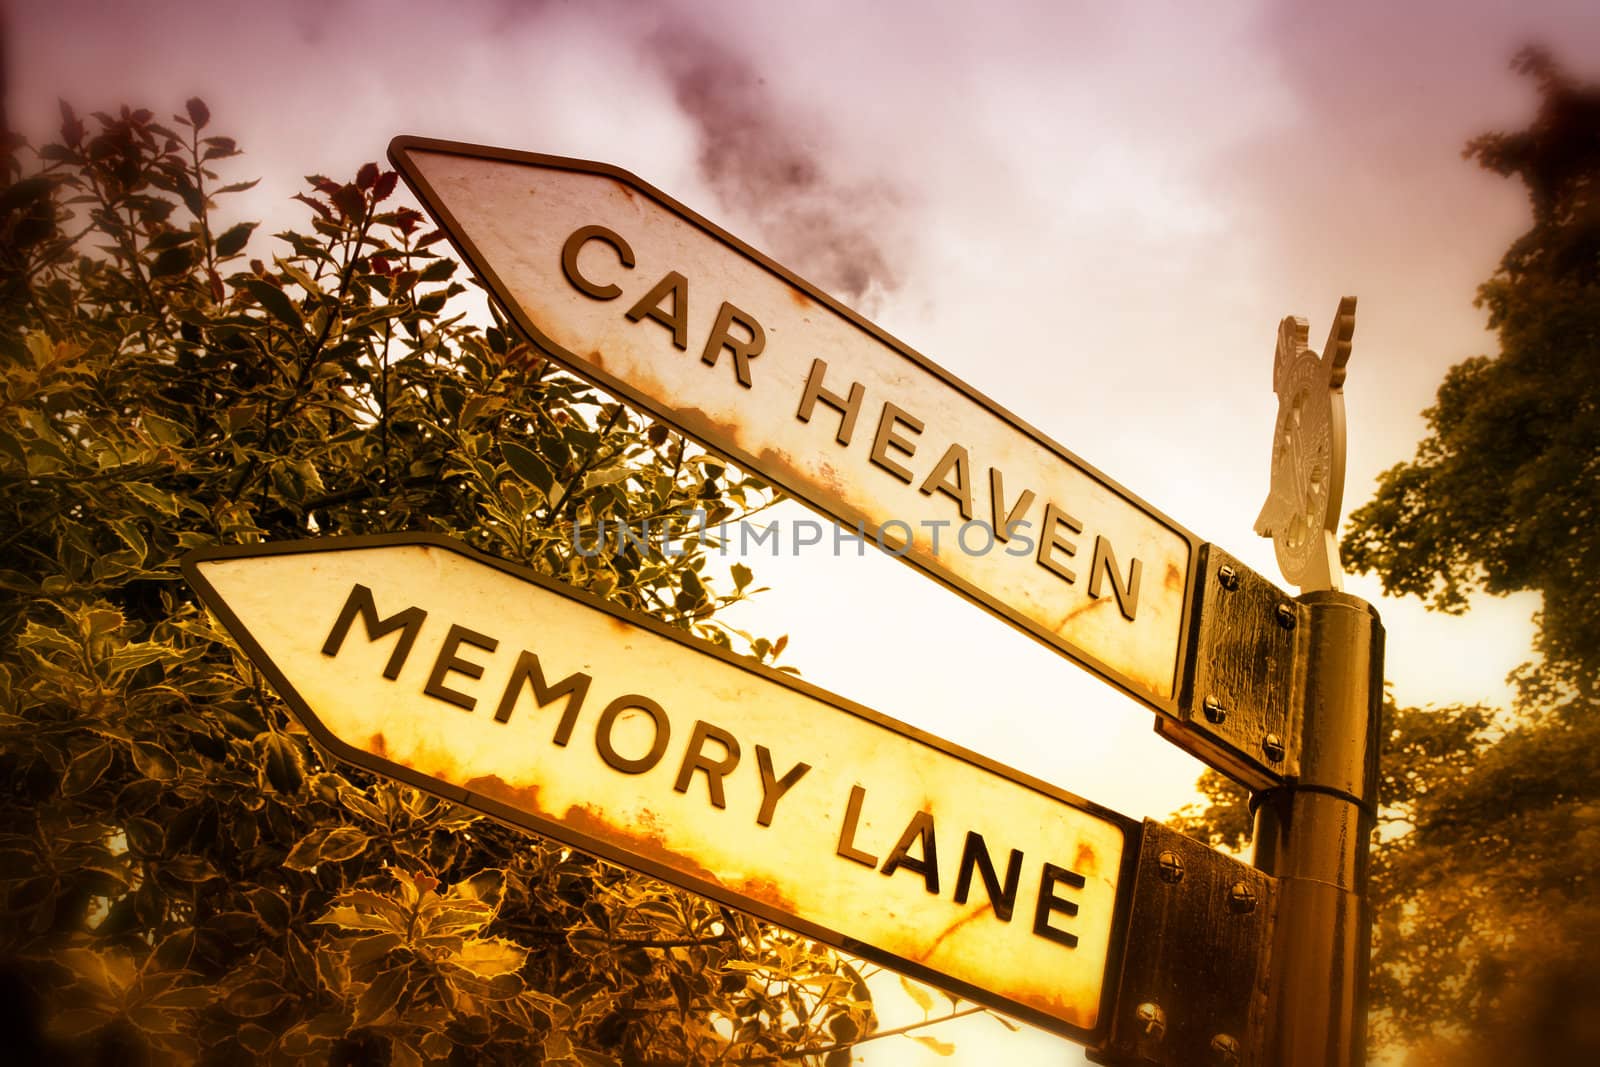 Memory lane by ABCDK